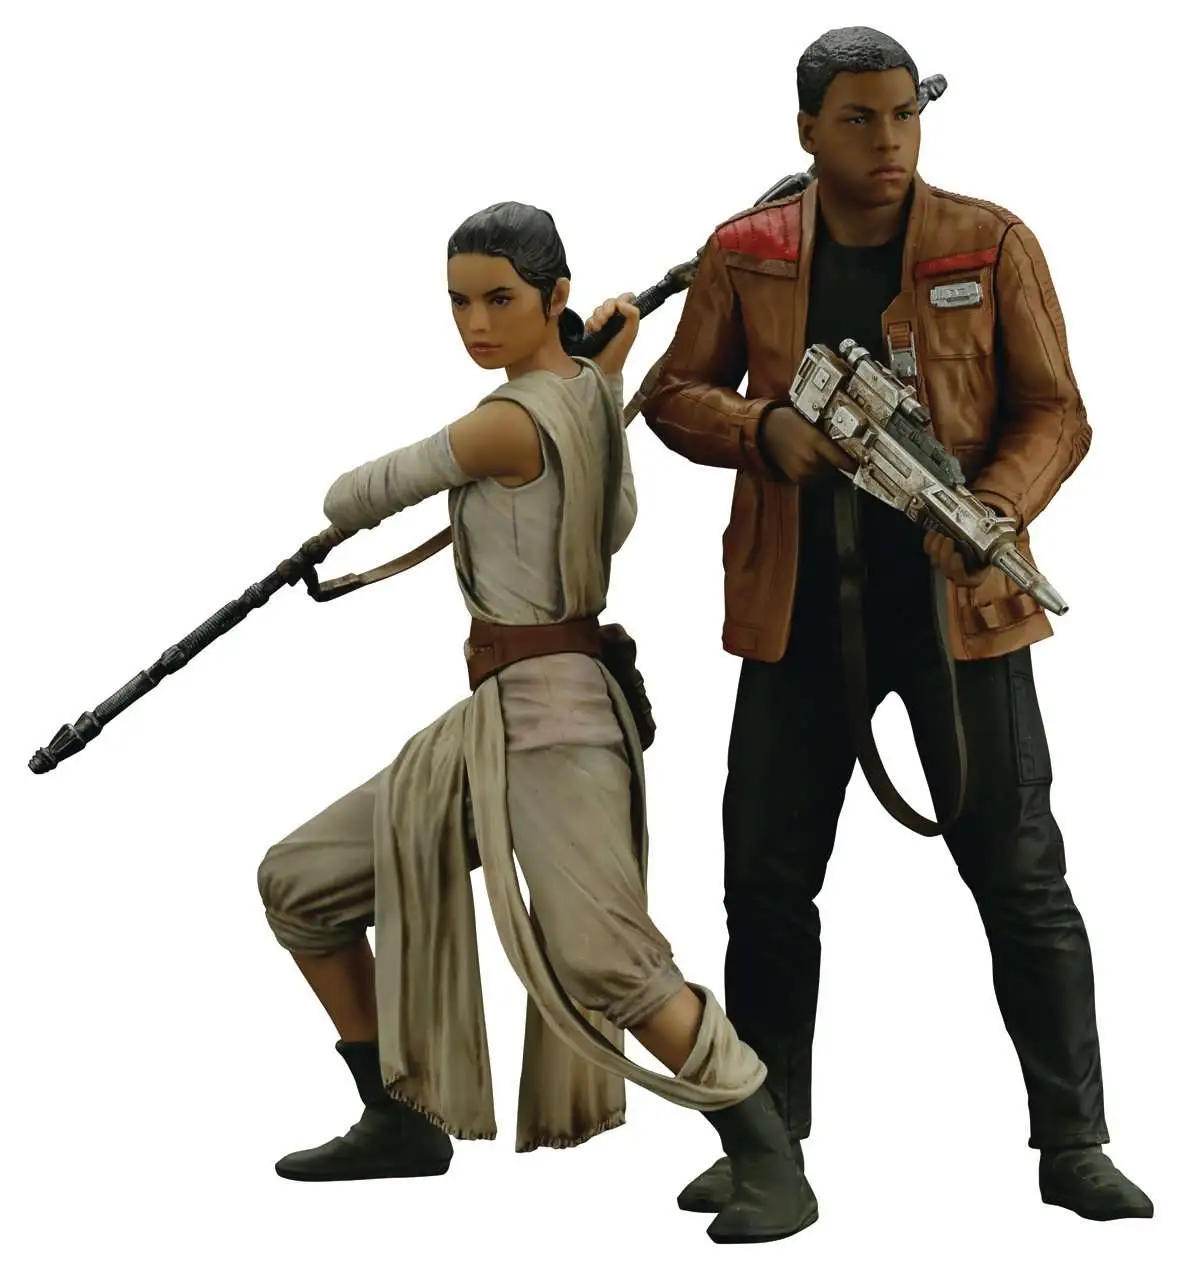 Star Wars Battle Packs Unleashed Battle of Hoth Rebel Alliance Troopers 2006